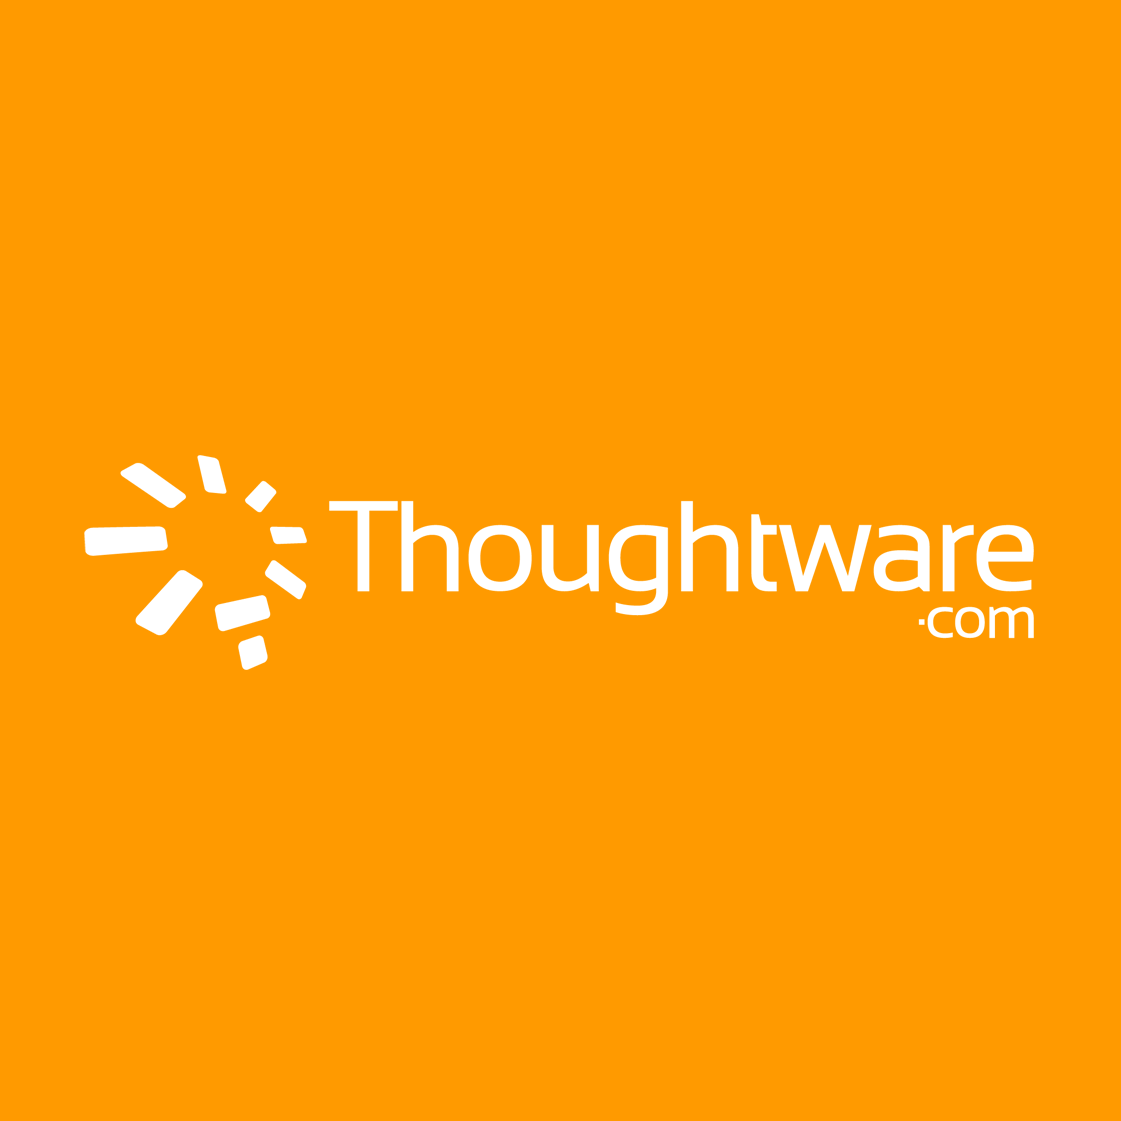 Thoughtware.com